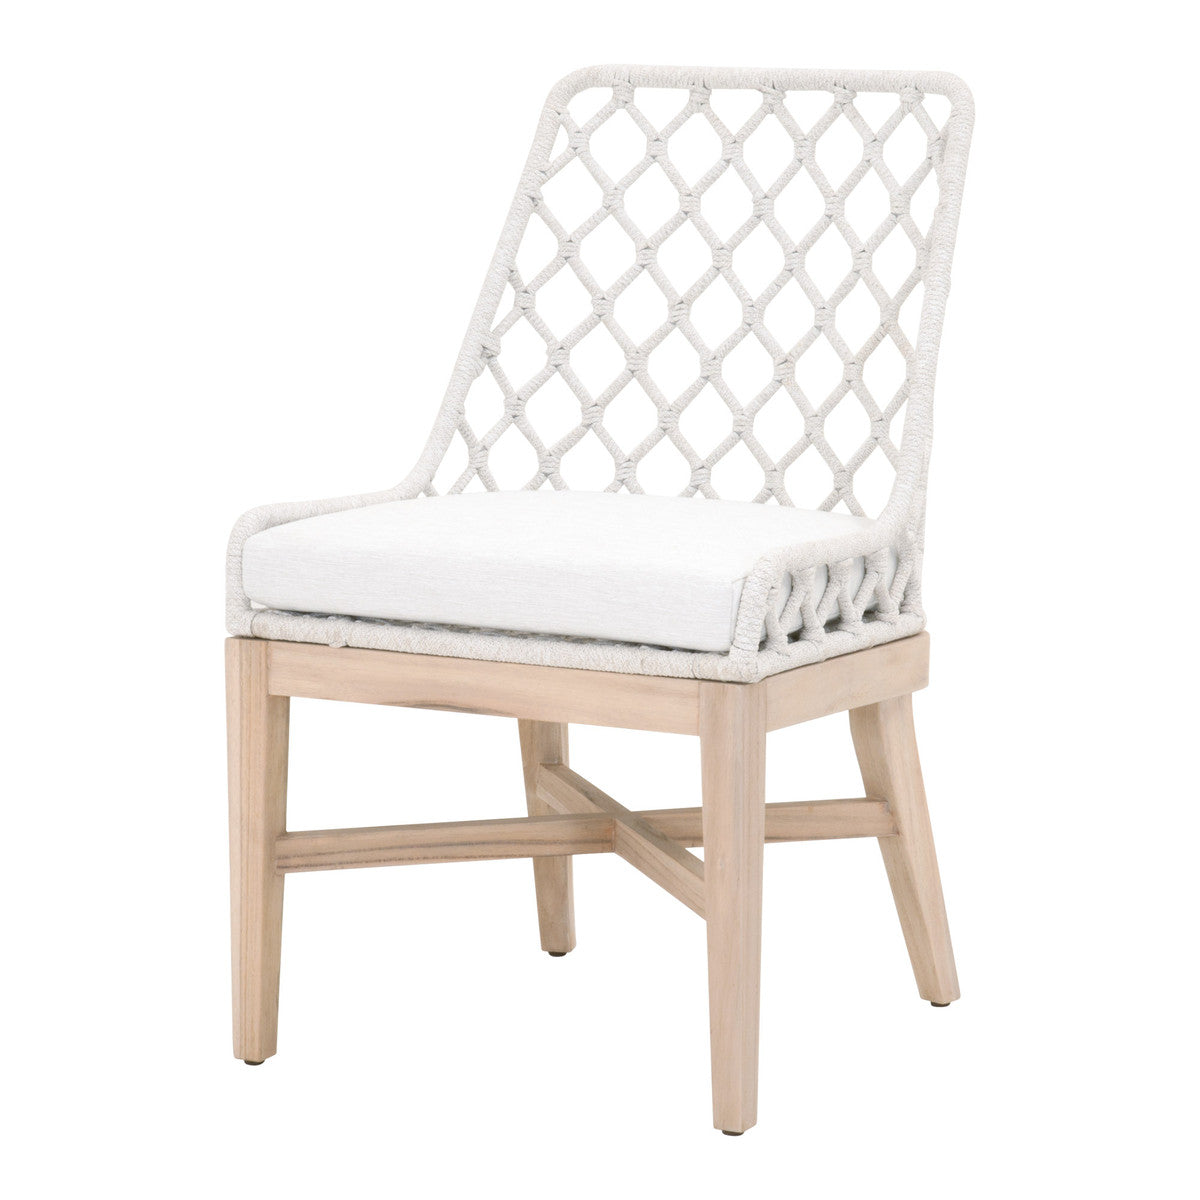 Lattice Outdoor Dining Chair